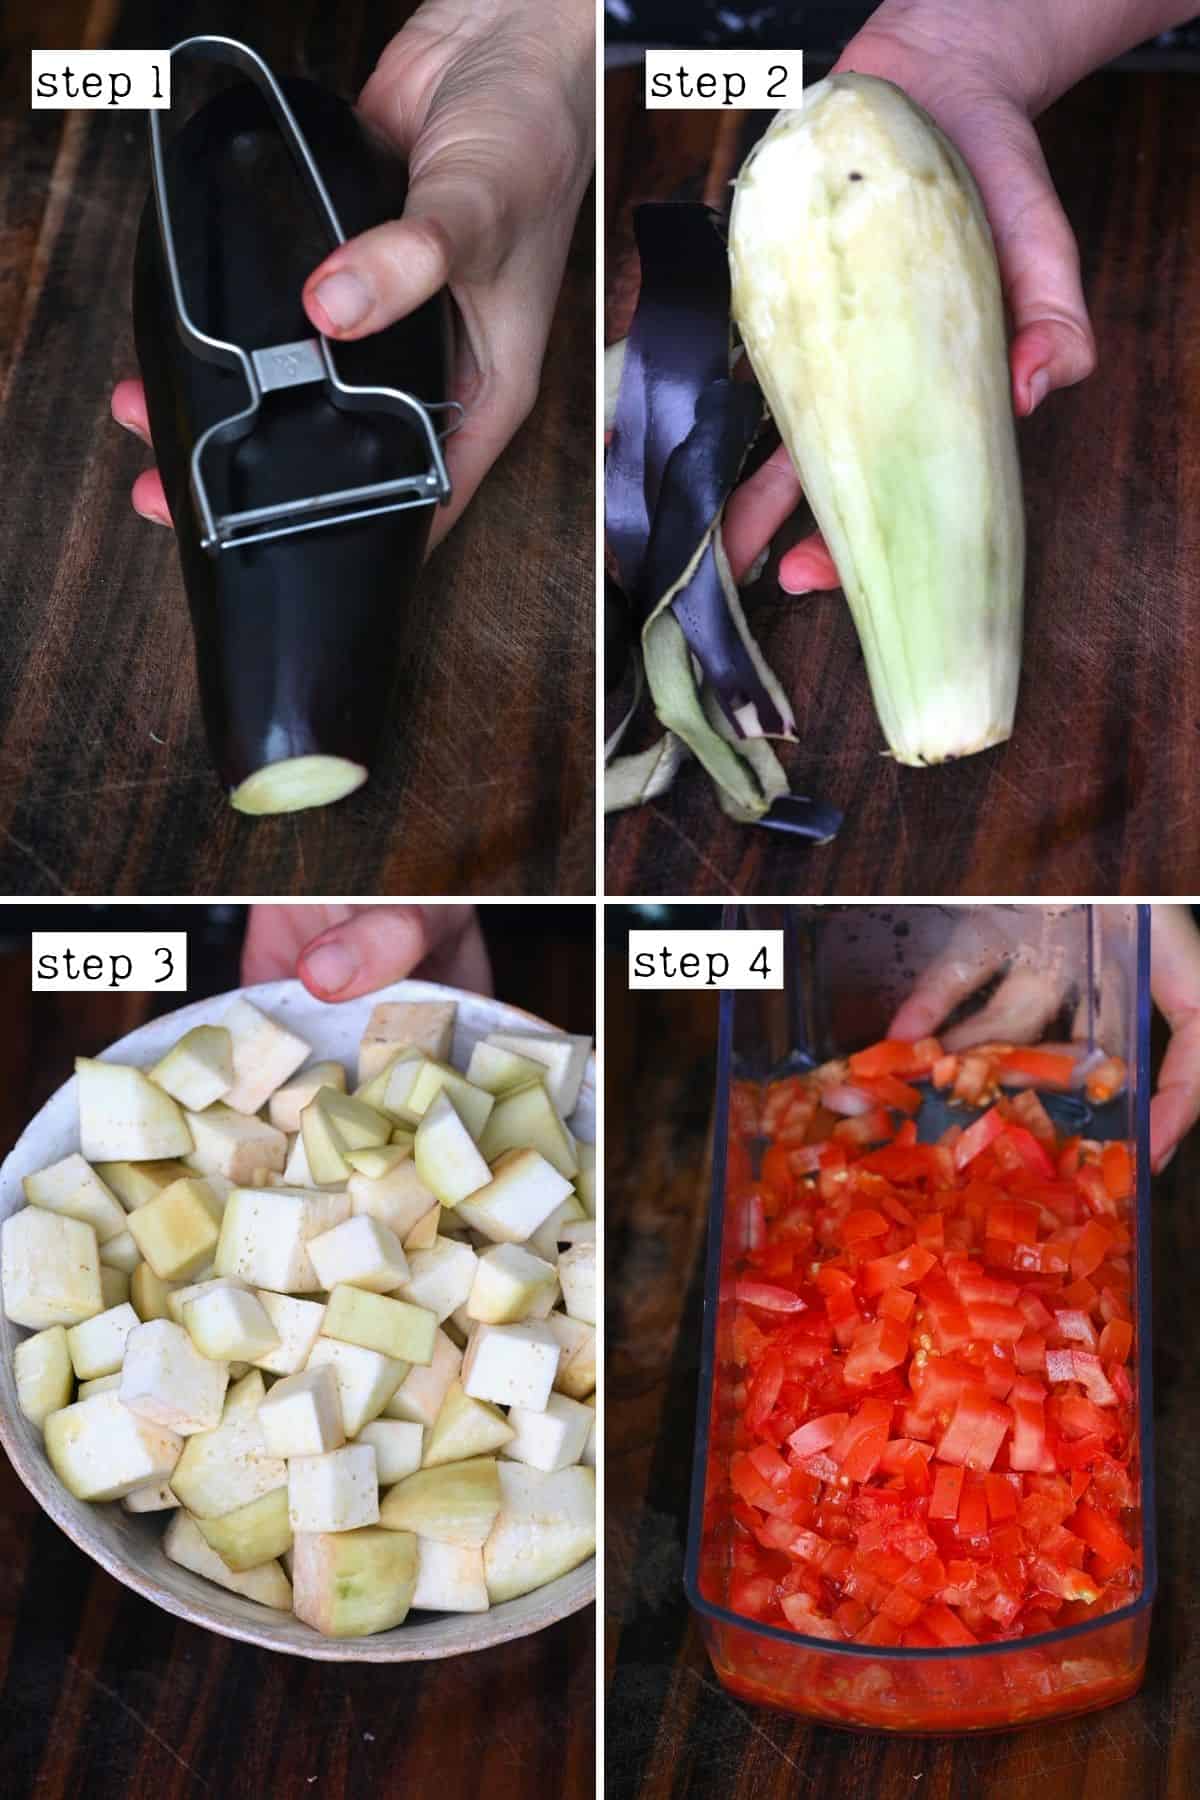 Steps for preparing veggies for zaalouk